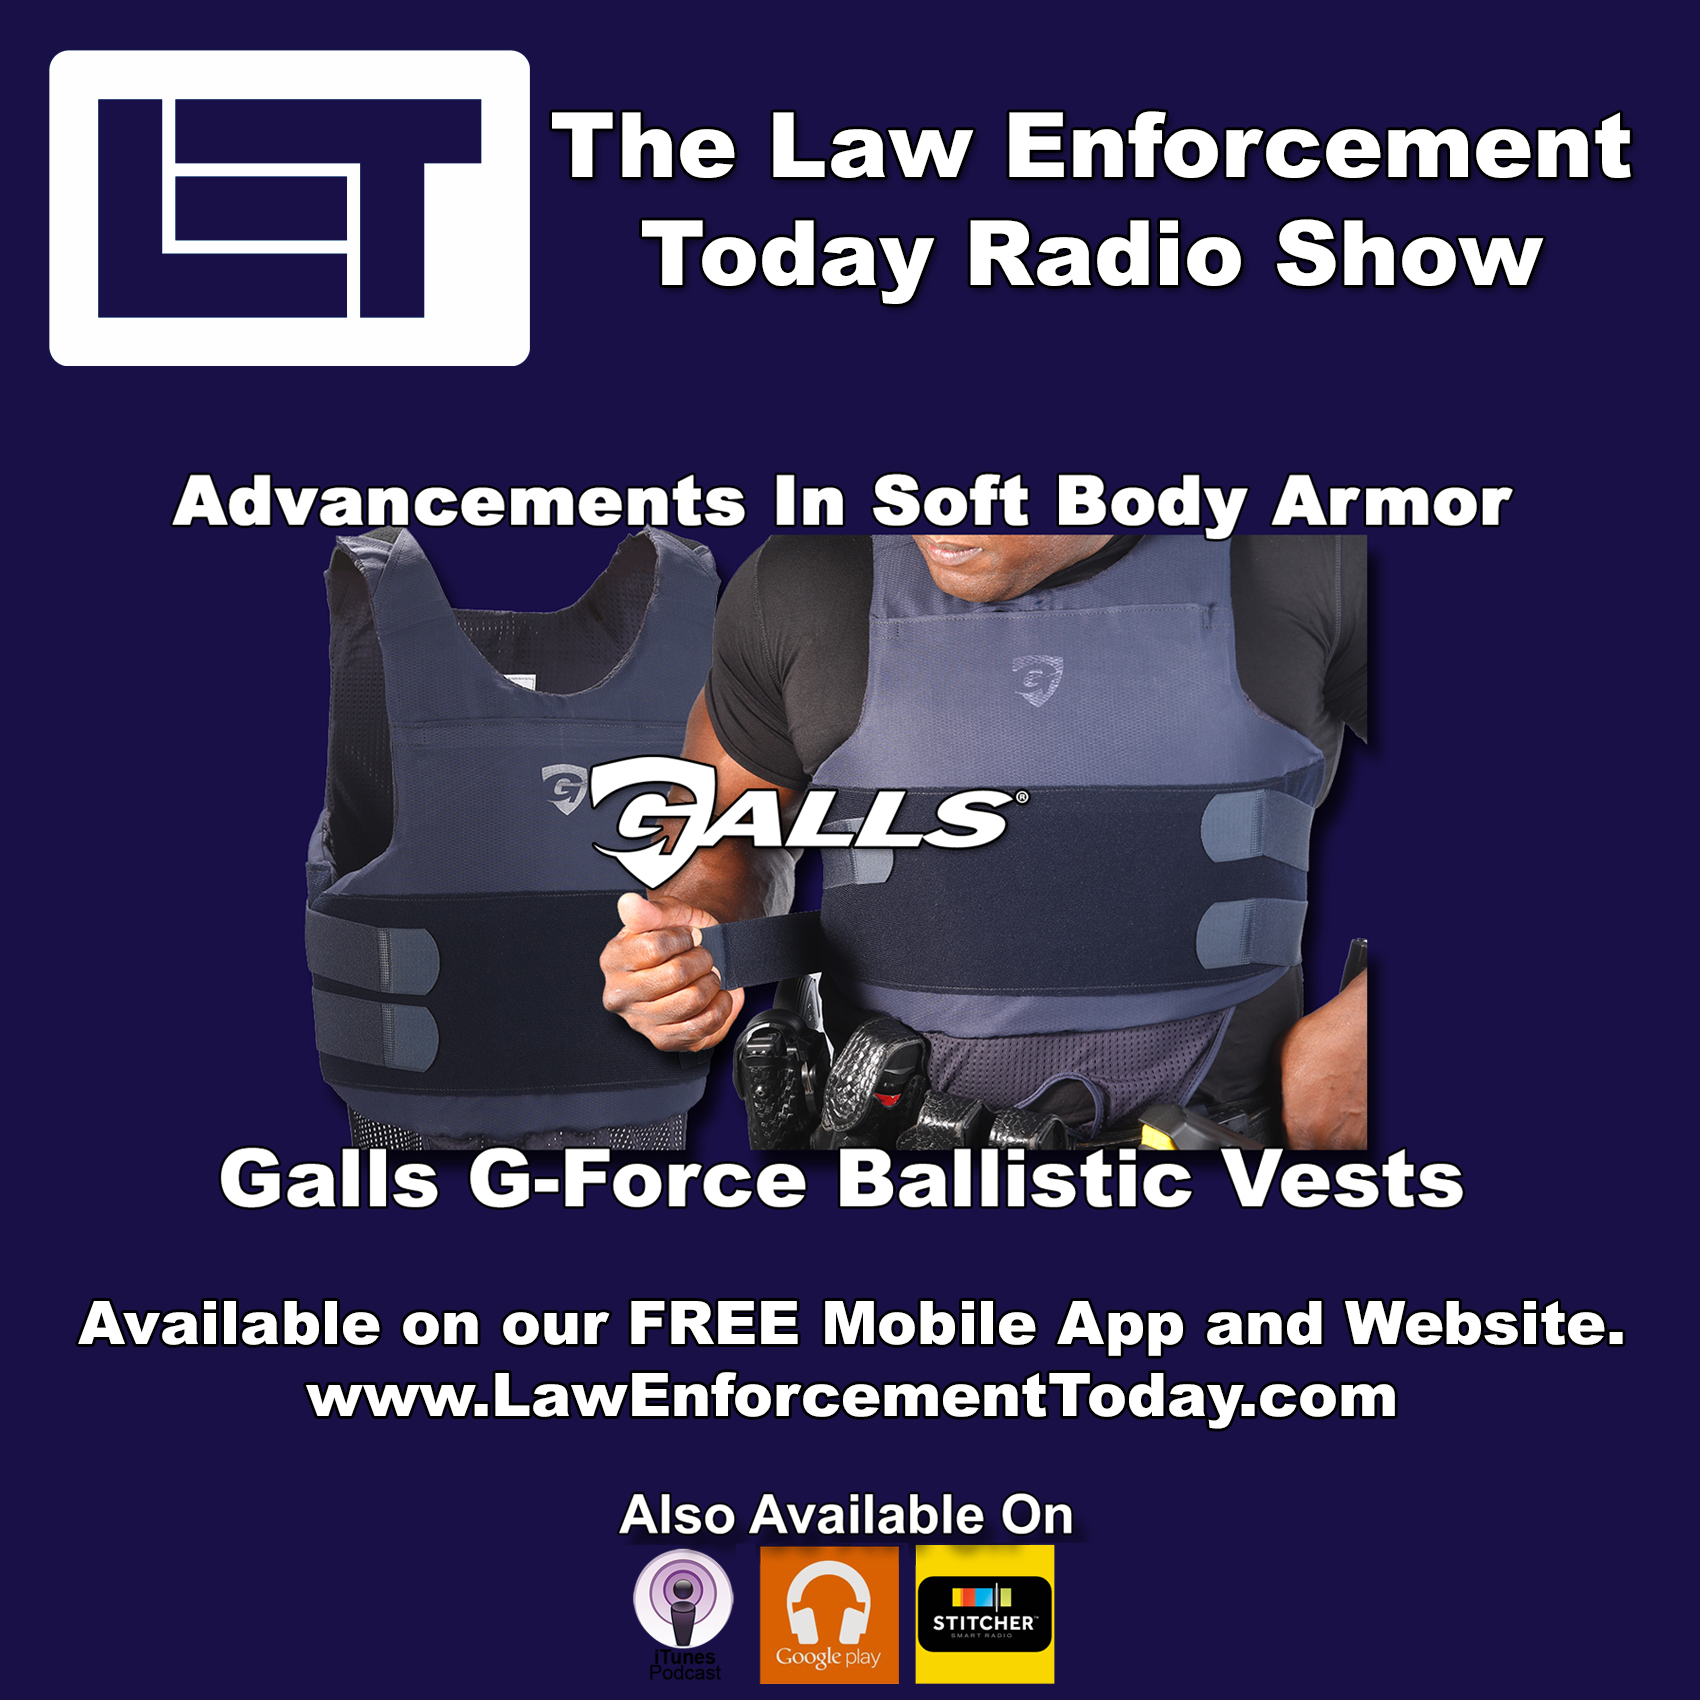 Body Armor Advancements, Galls G-Force Ballistic Vests